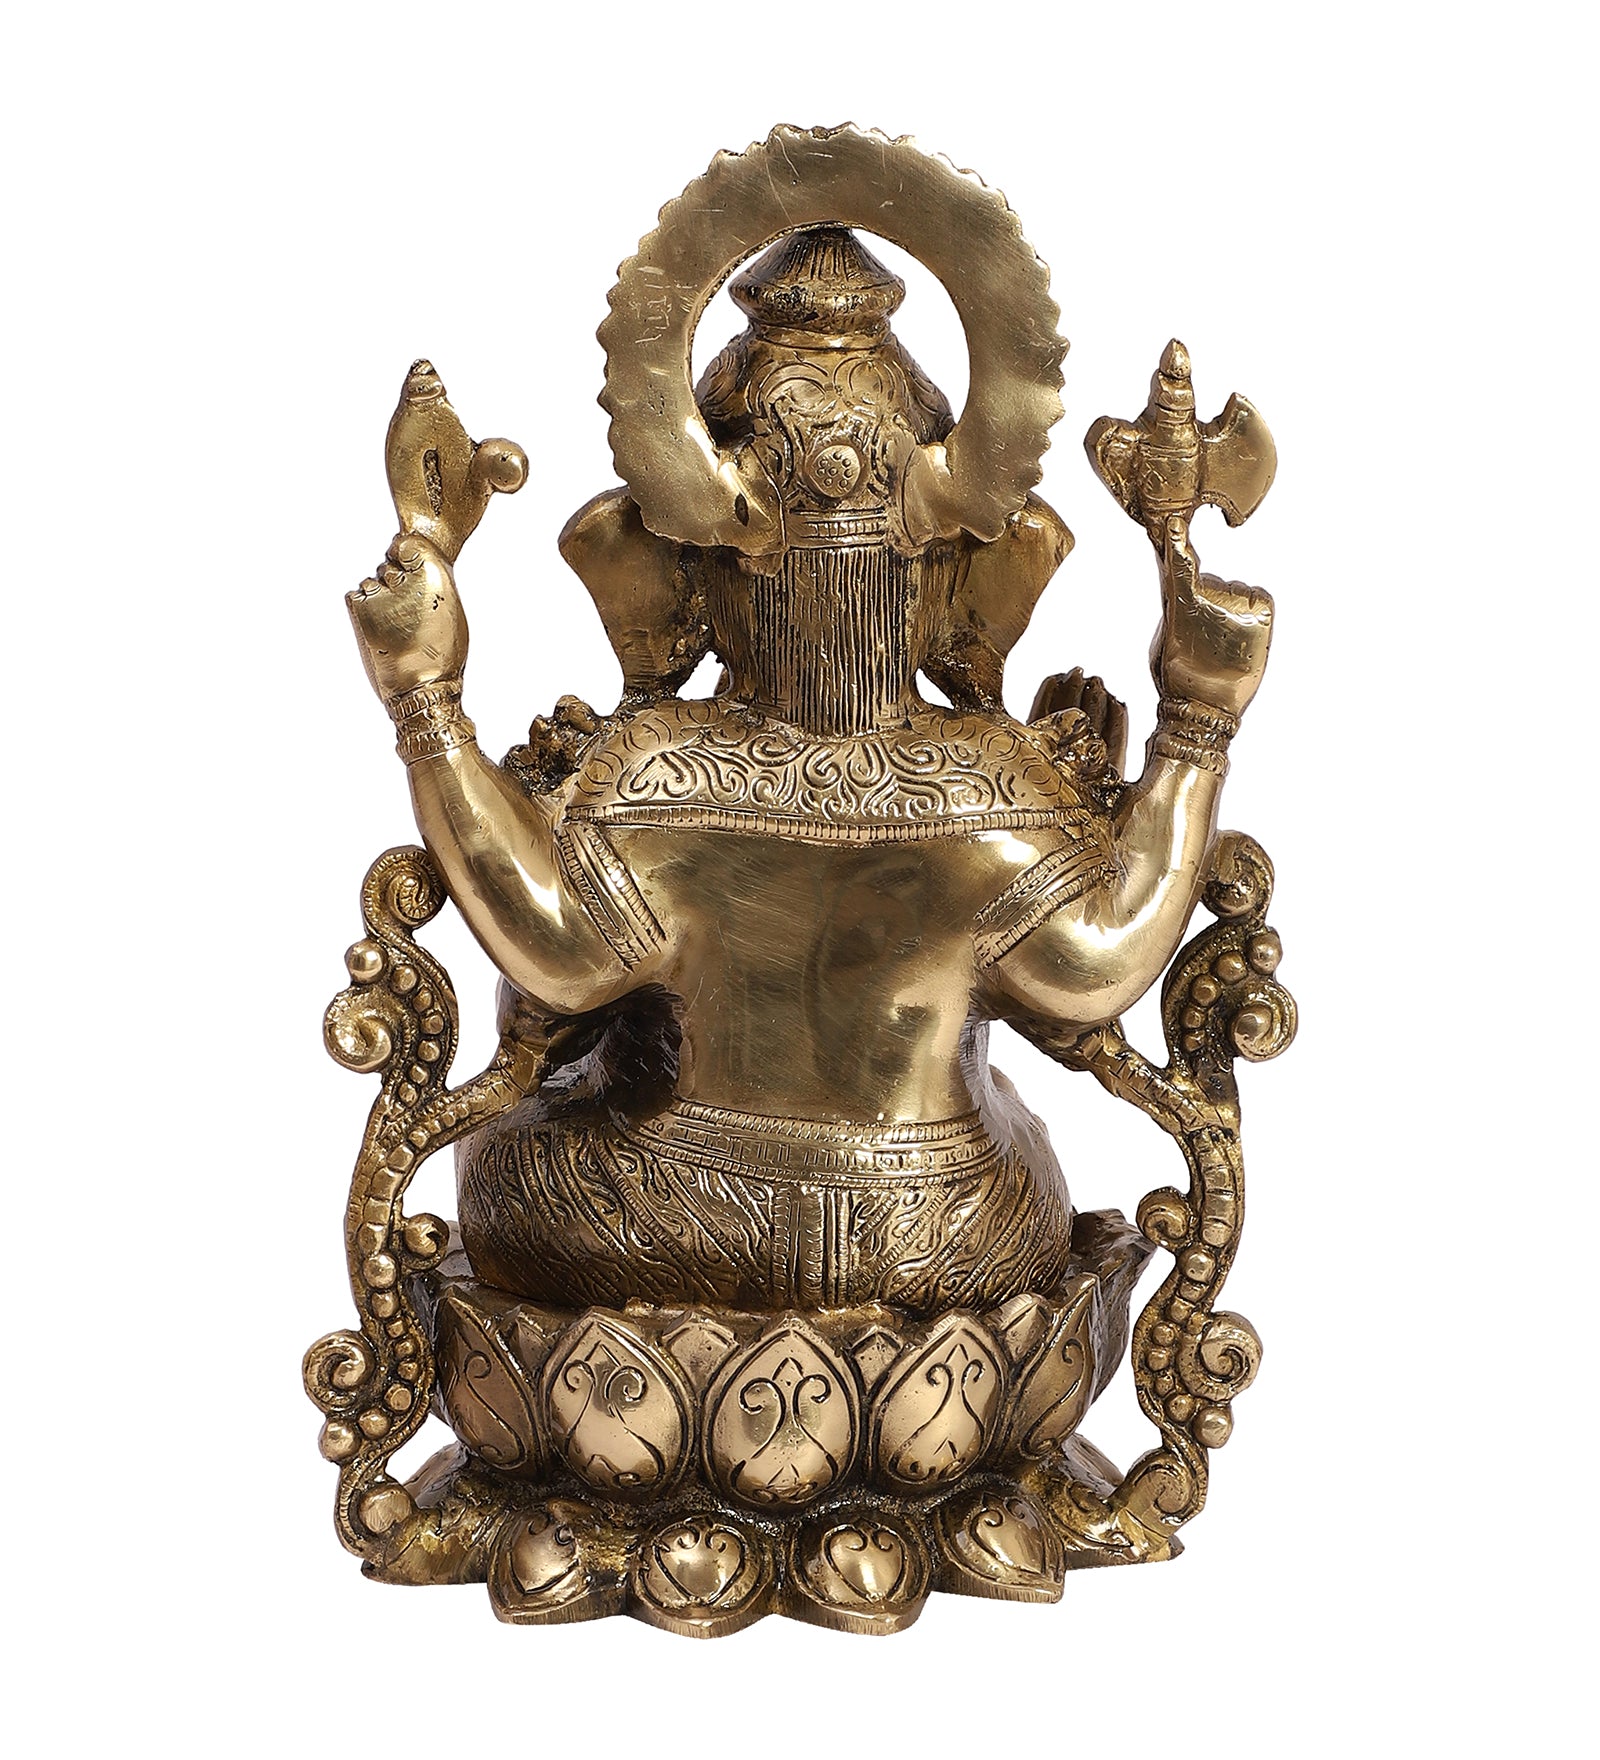 Brass 12 Inches Handcrafted Ganesha Statue, Brass Ganesha Idol, Ganesha Statue for Home/Temple